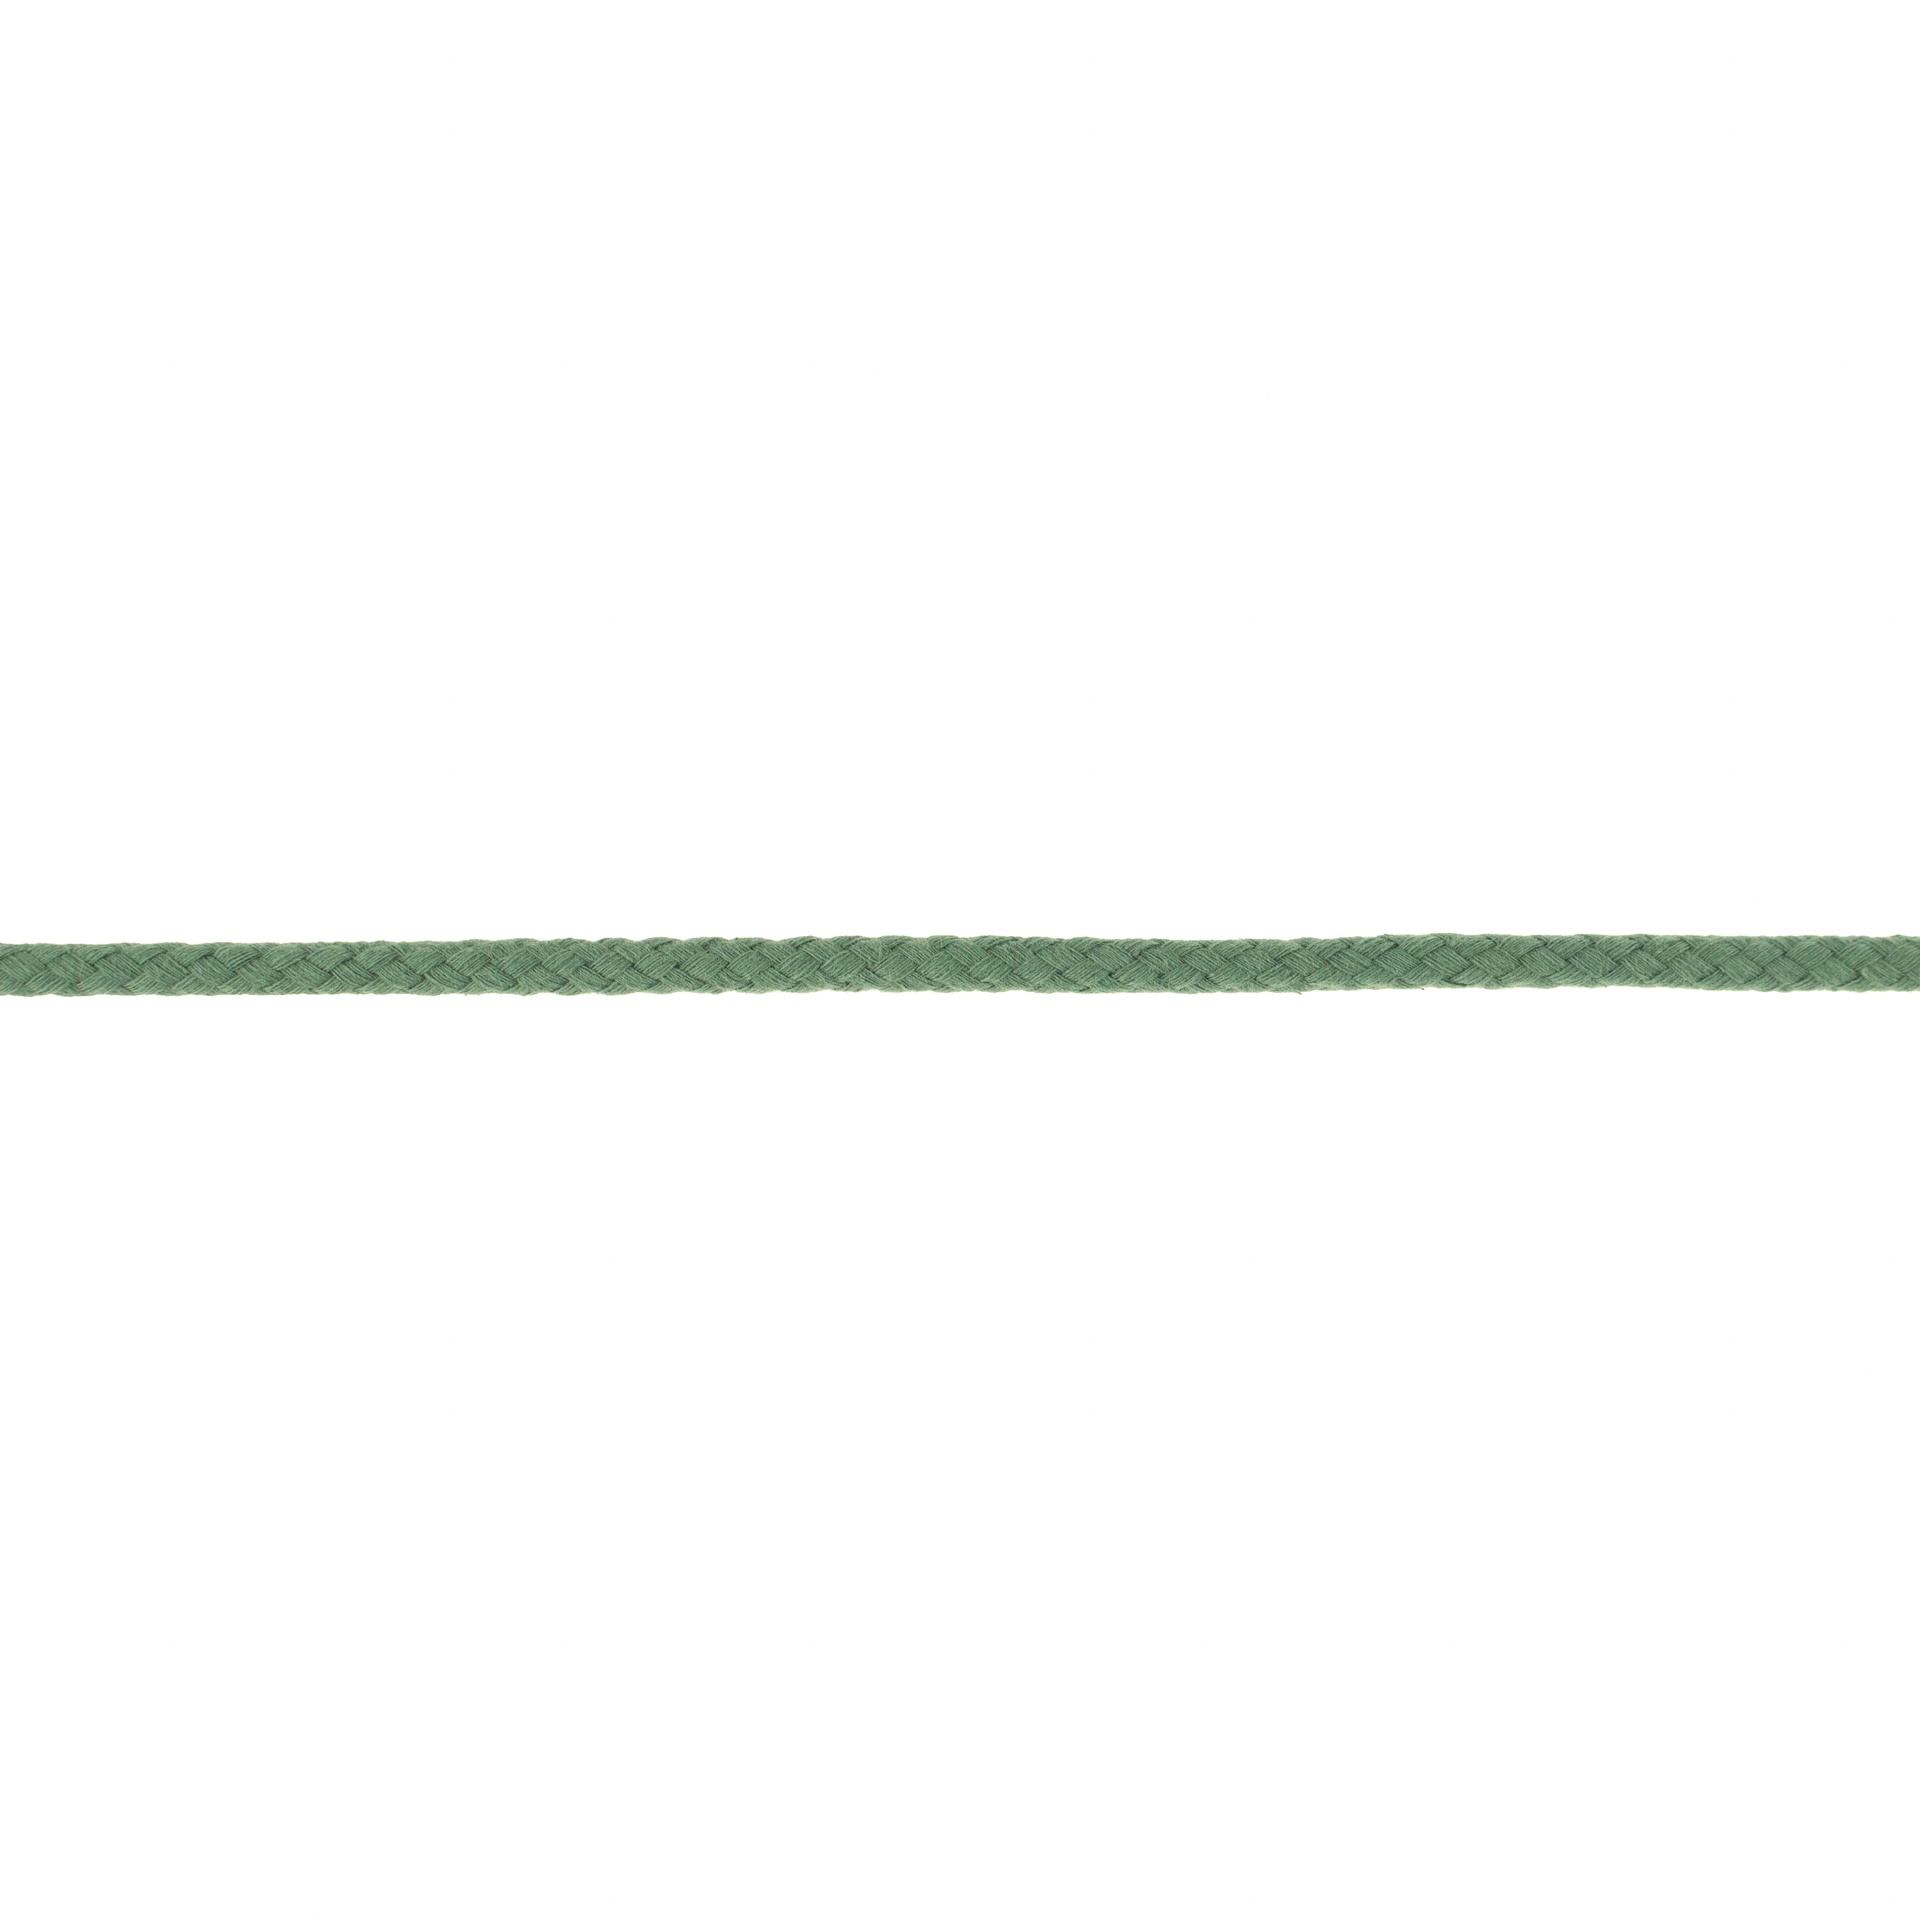 Doppelt gewebte Baumwollkordel - 8mm - Altgrün